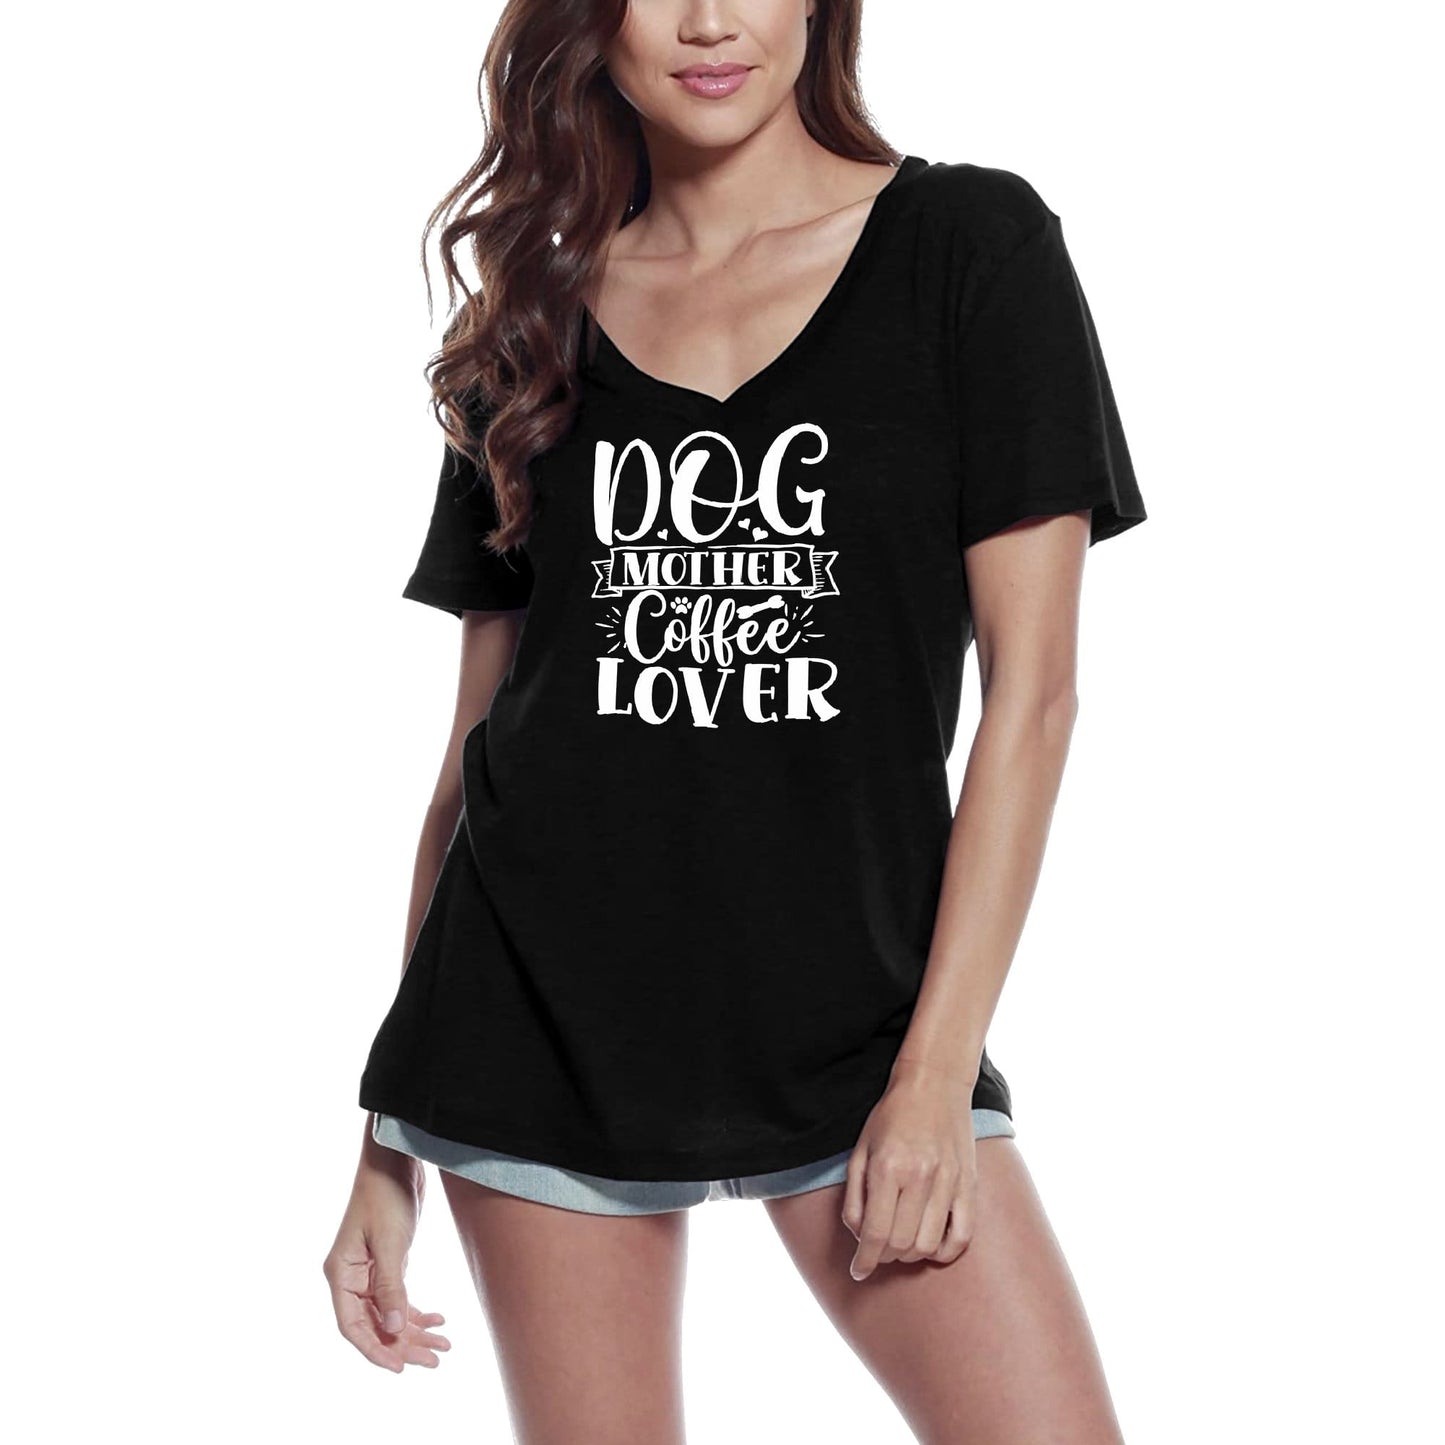 ULTRABASIC Women's T-Shirt Dog Mother Coffee Lover - Funny Vintage Short Sleeve Tee Shirt